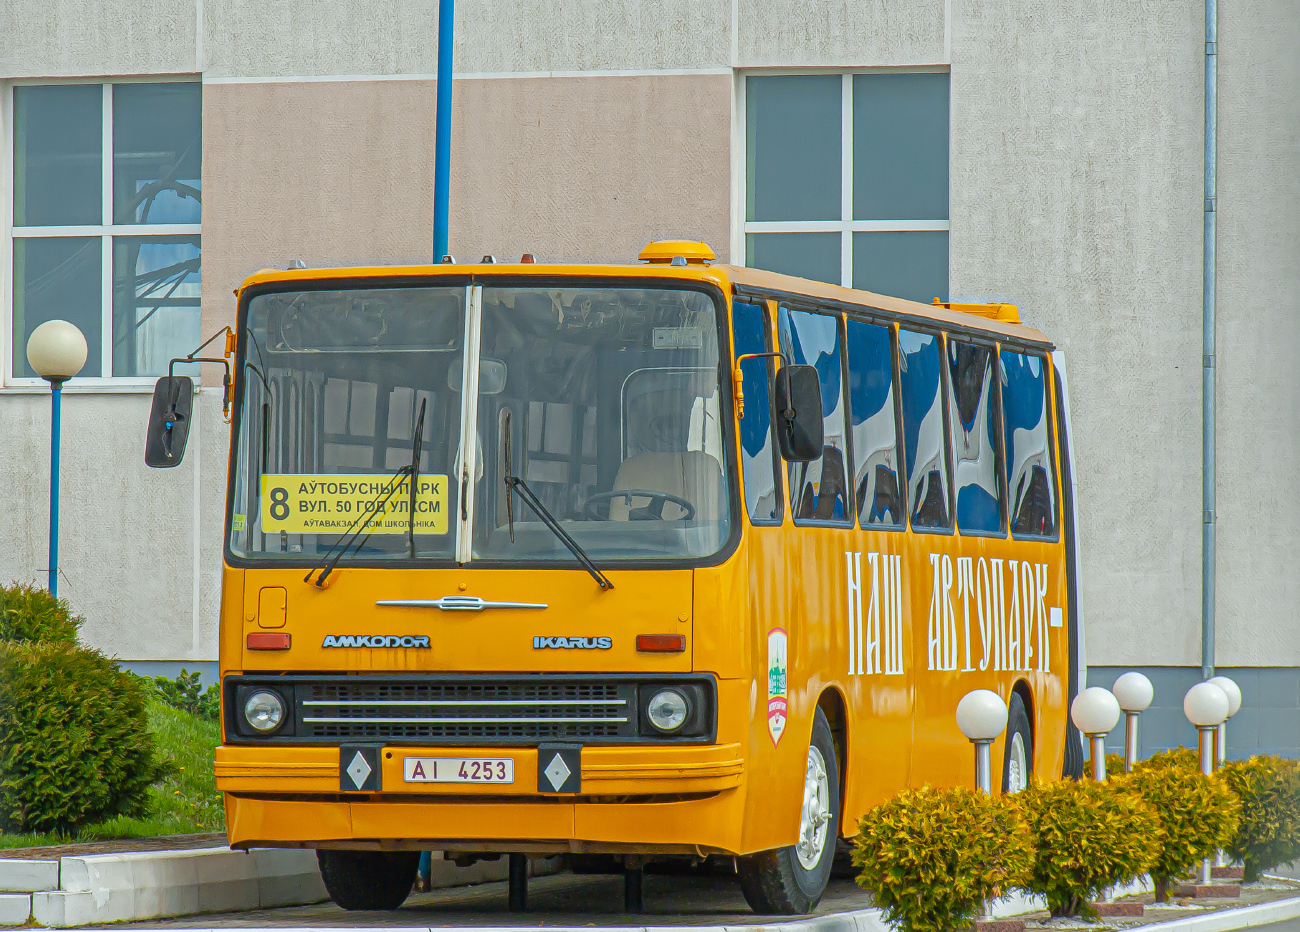 Baranovichi, Amkodor-10126 (Ikarus 280) # 11490; Автобусы-памятники